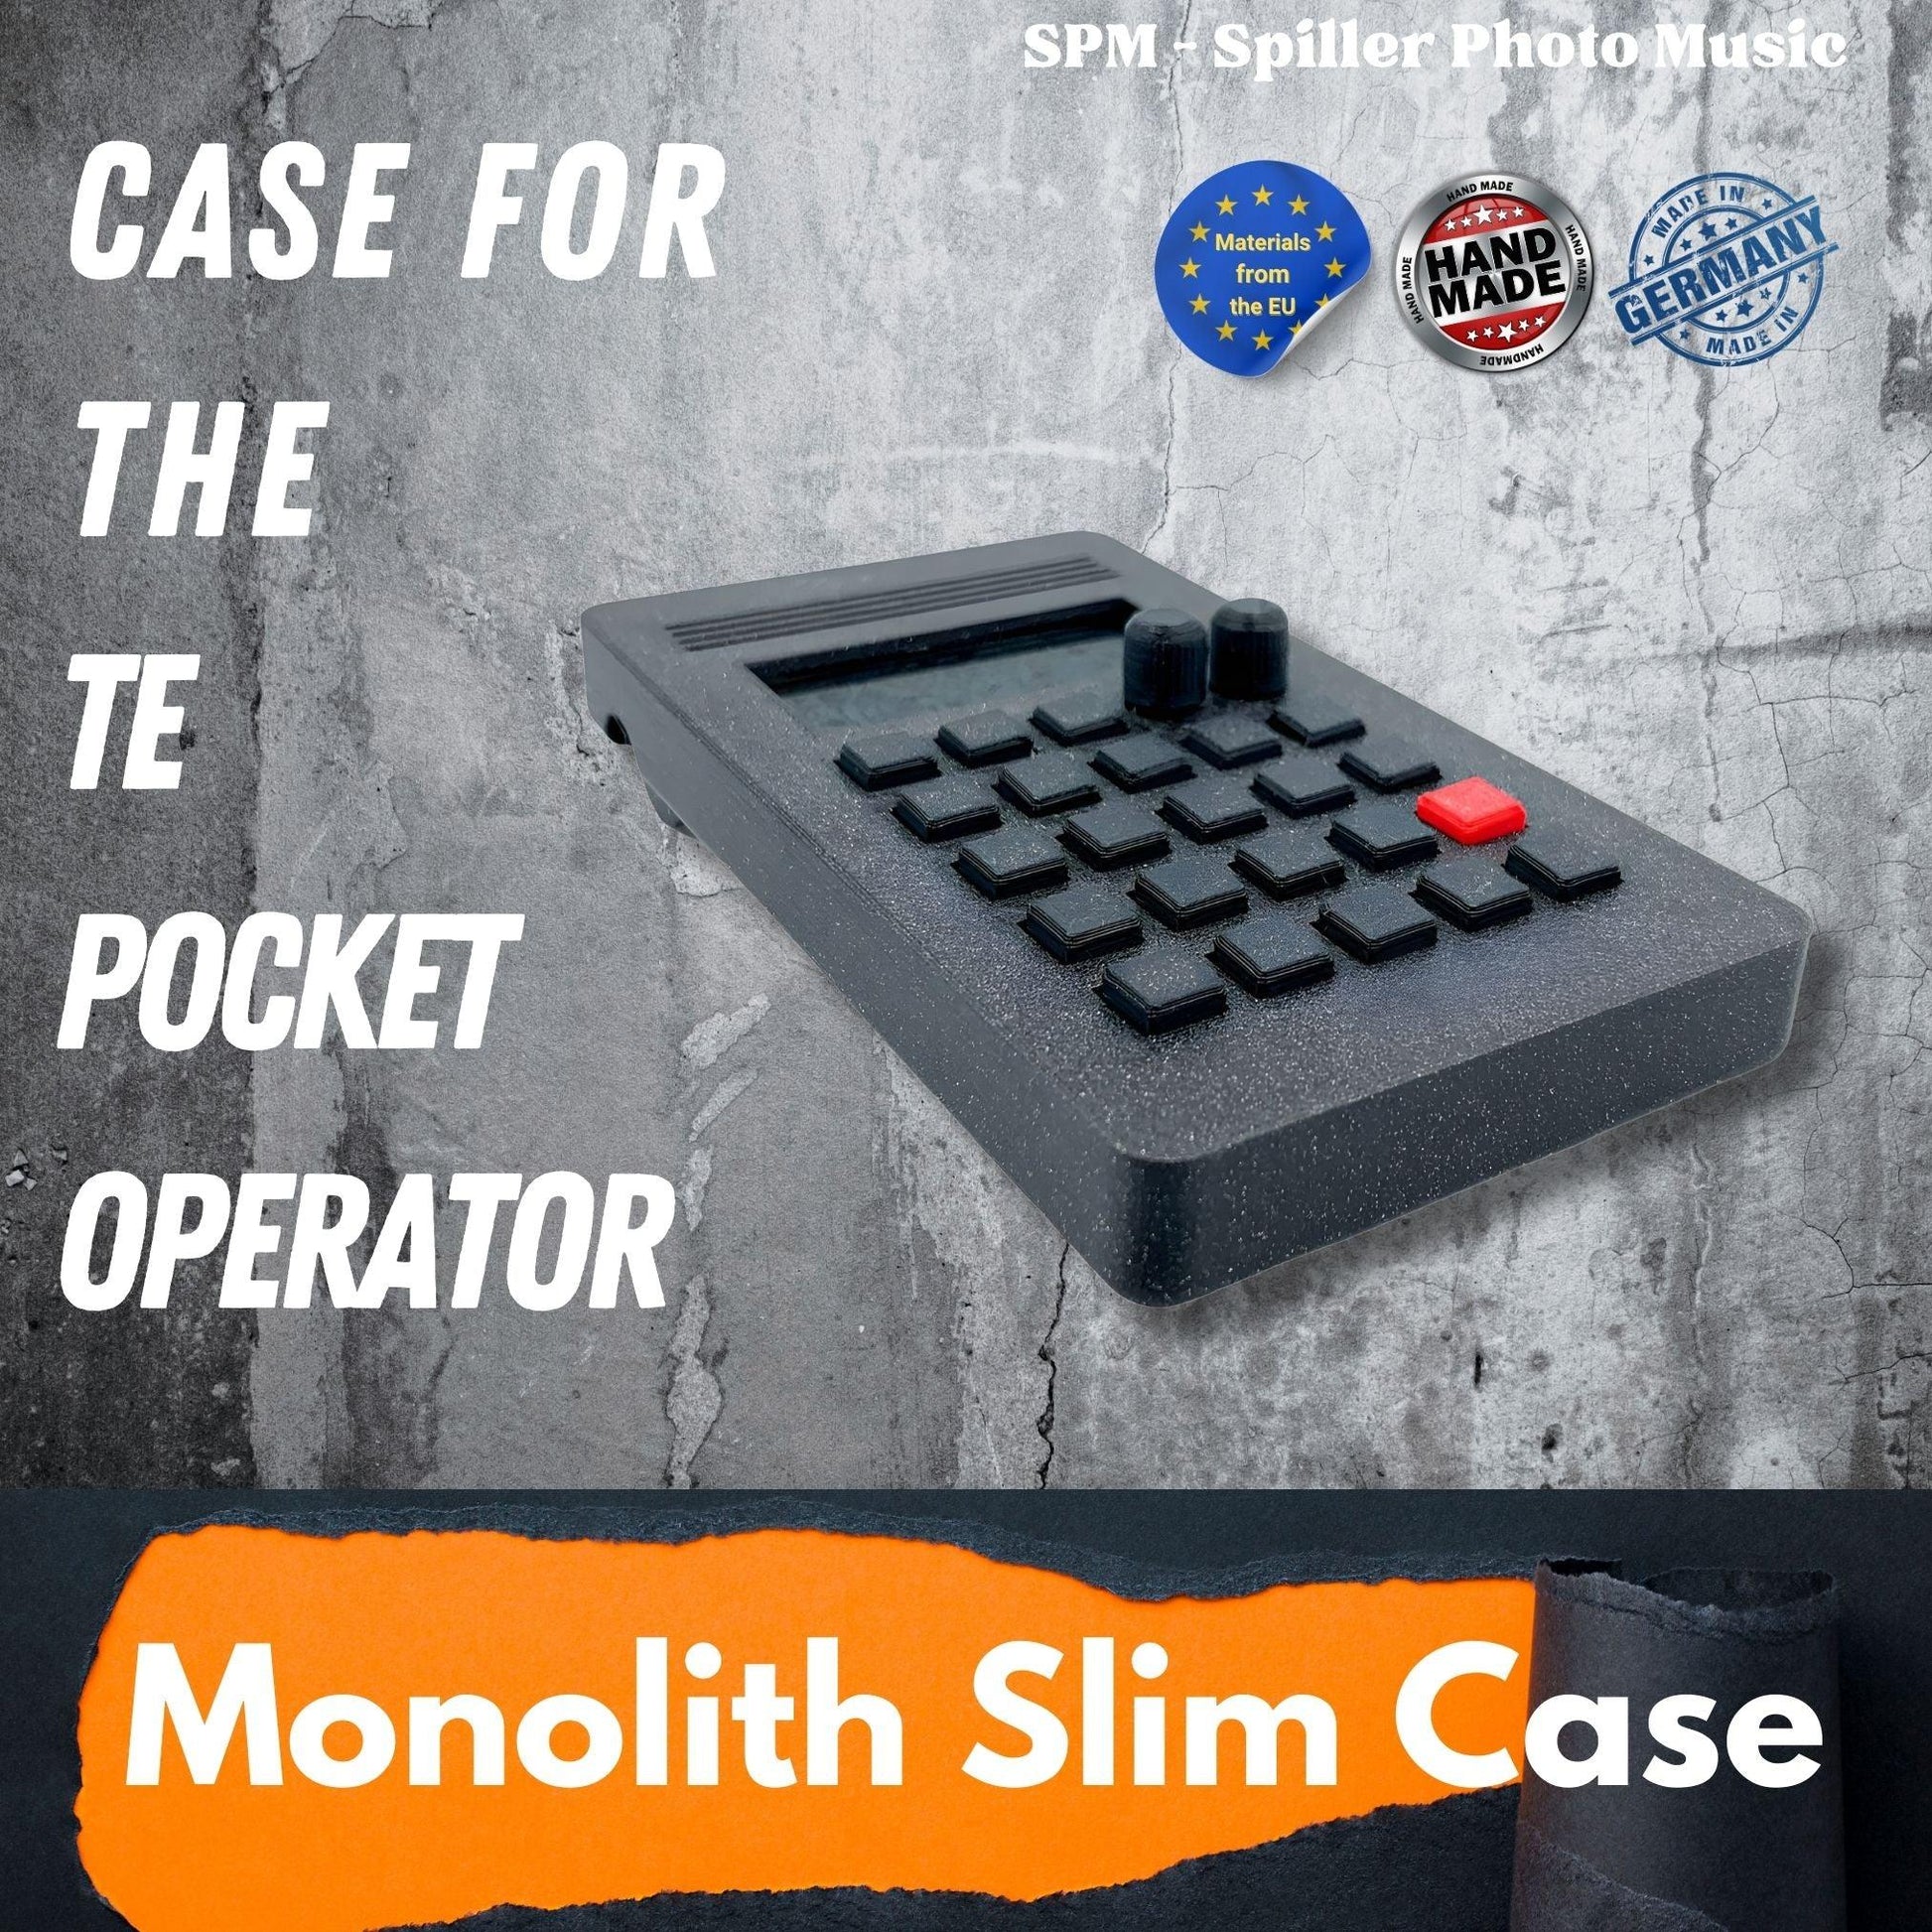 MONOLITH SLIM Case